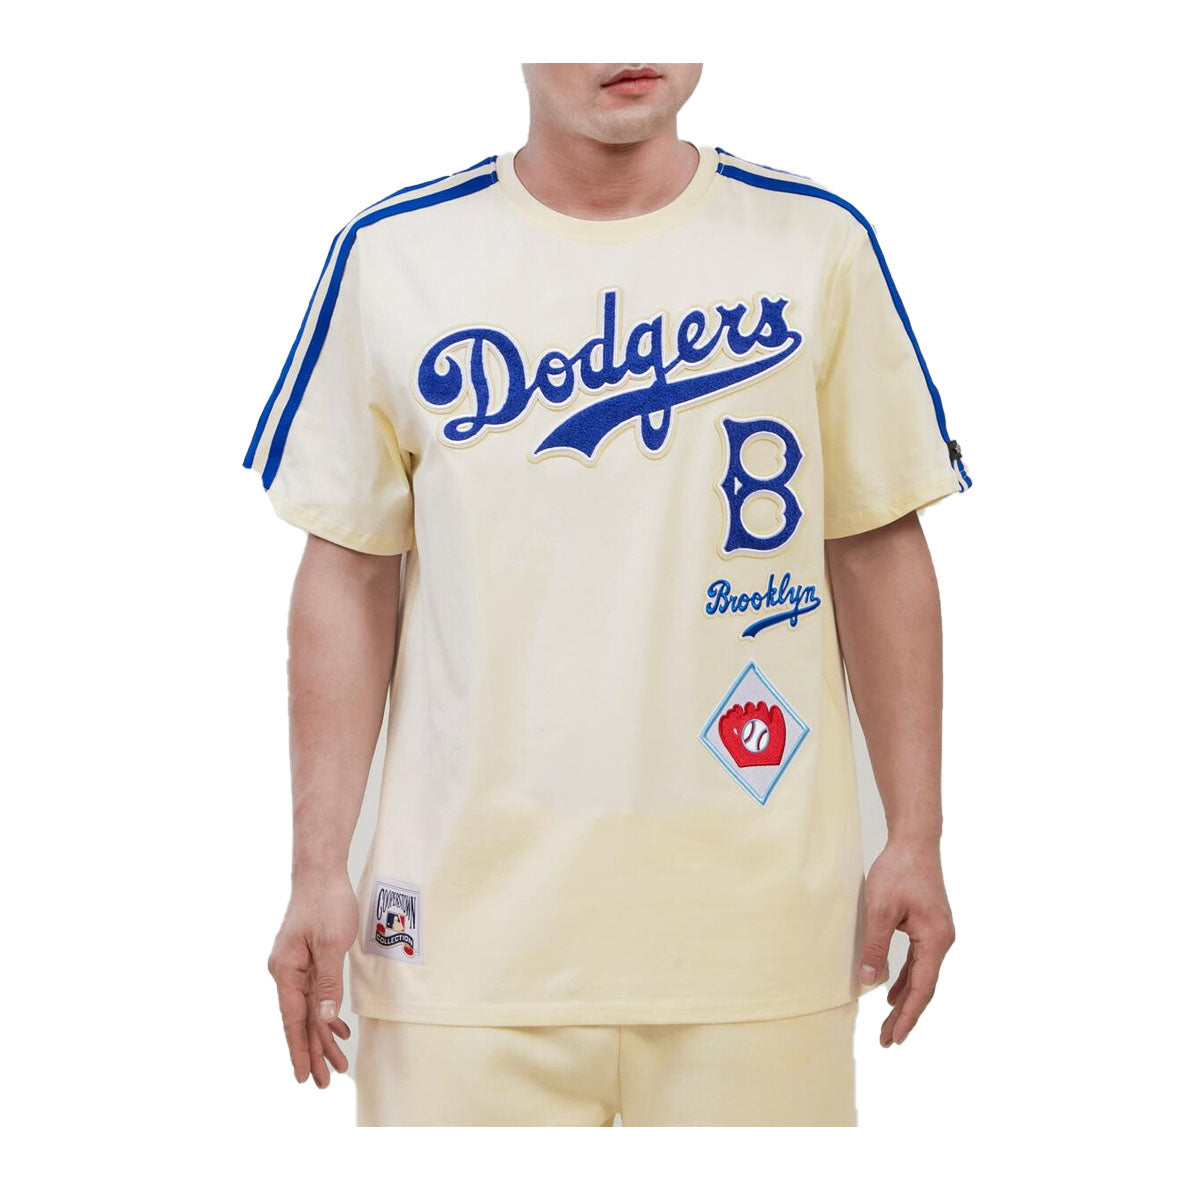 LA Dodgers Throwback Jerseys, Vintage MLB Gear